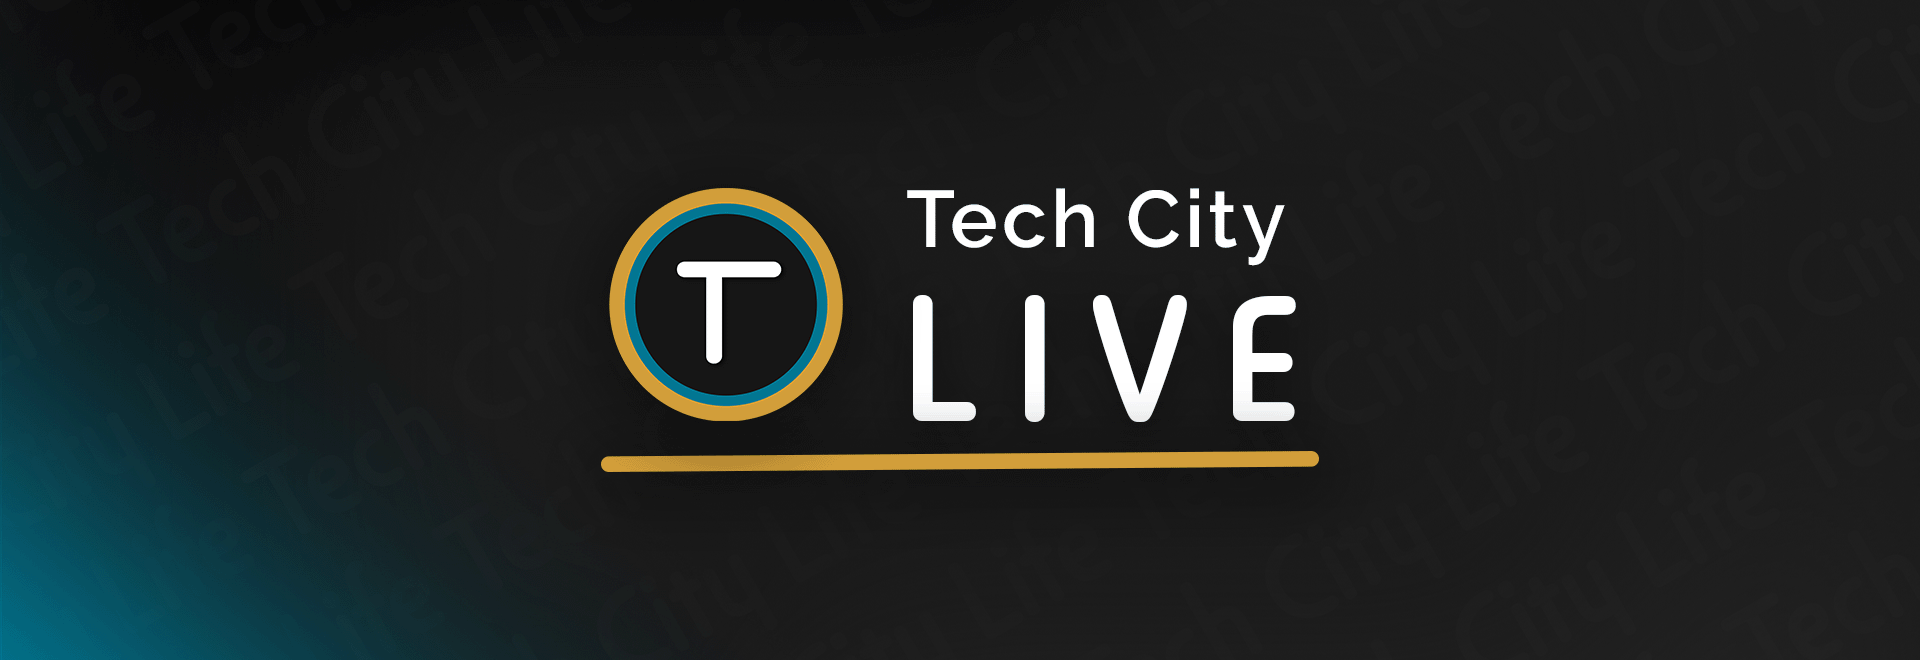 Tech City LIVE – November Update